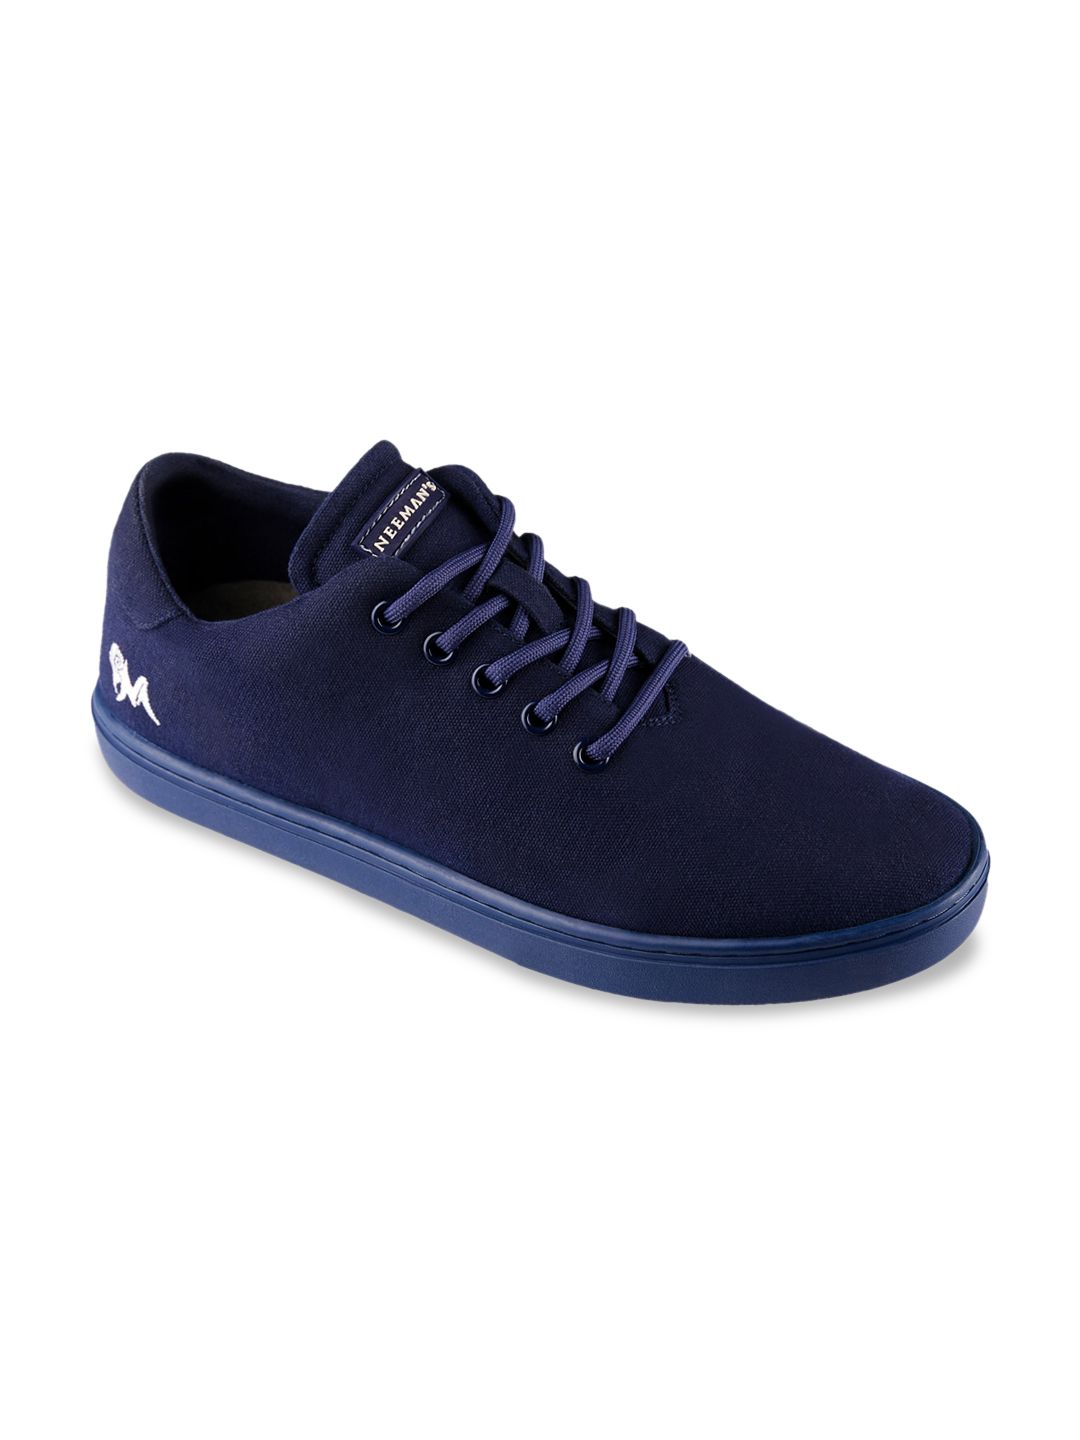 NEEMANS Unisex Midnight Blue Cotton Classic Sneakers Price in India